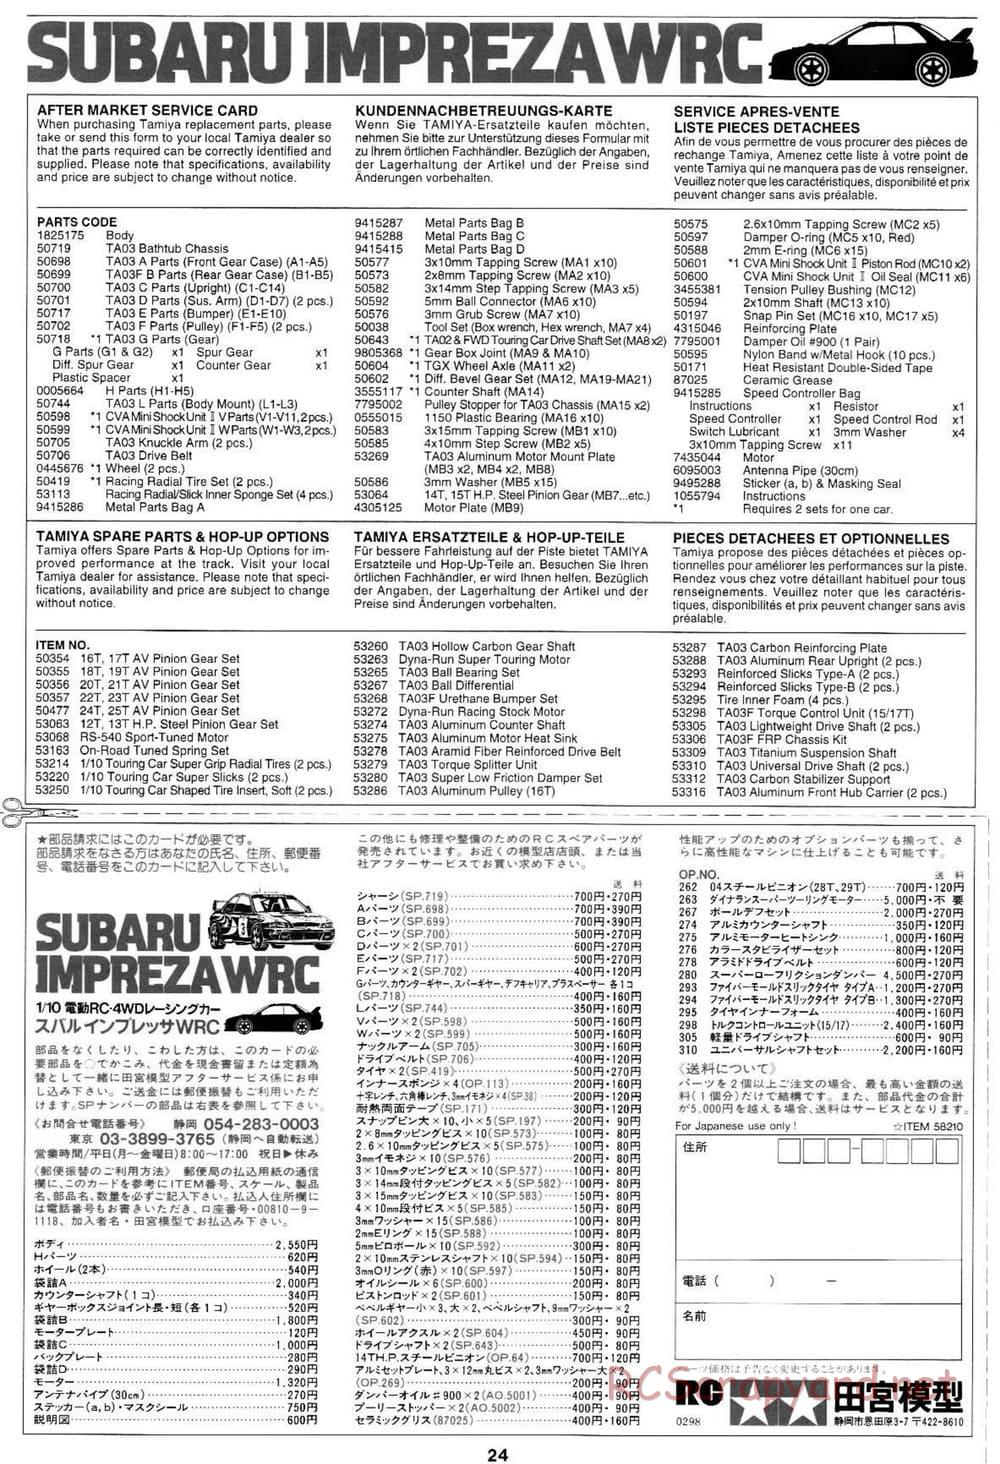 Tamiya - Subaru Impreza WRC 97 - TA-03F Chassis - Manual - Page 24